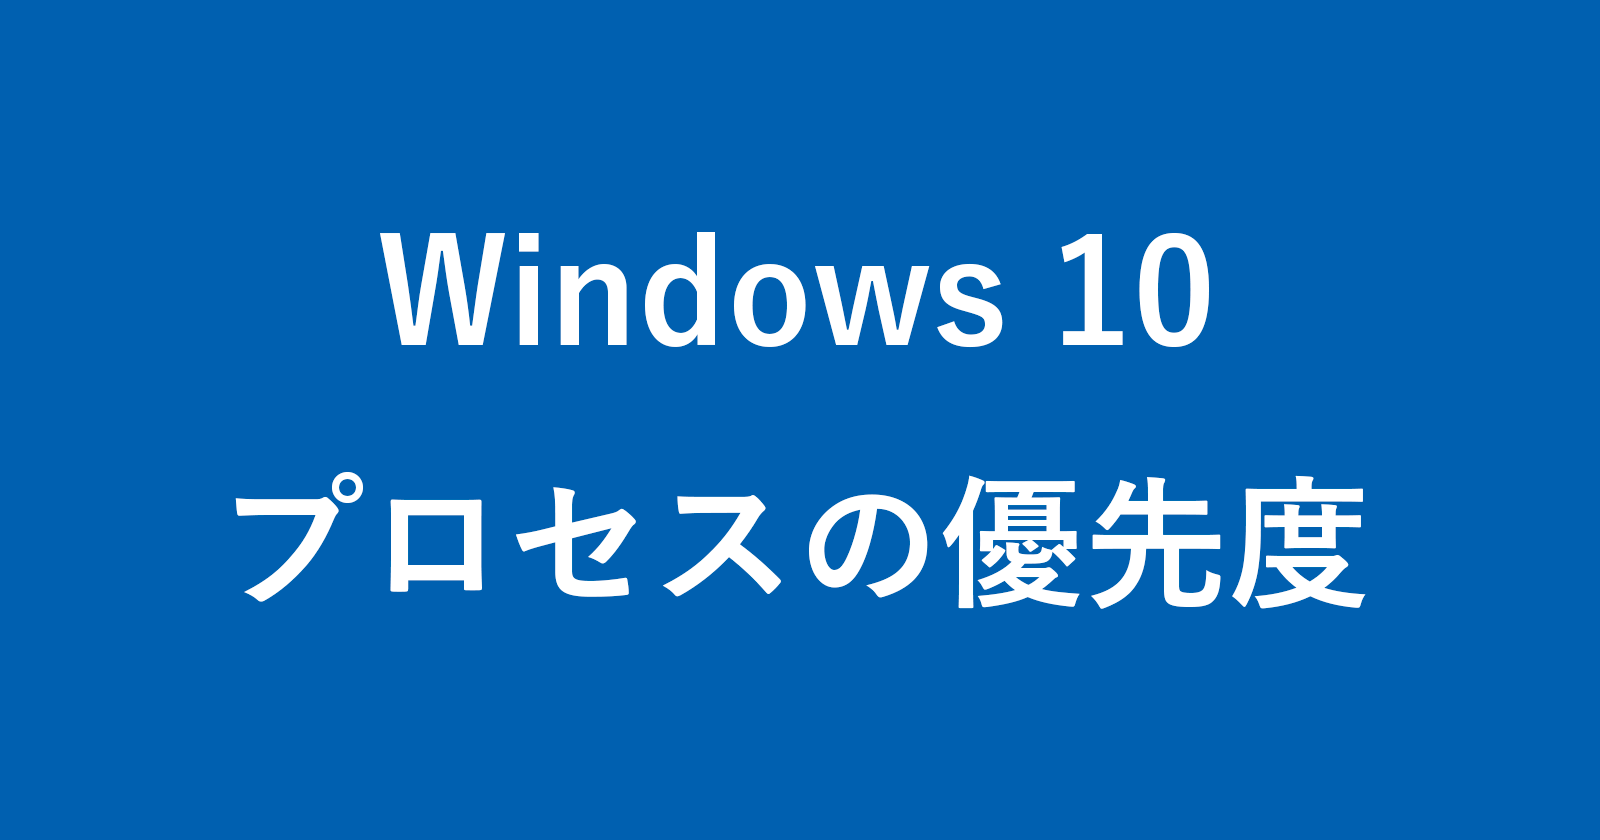 windows 10 process priority